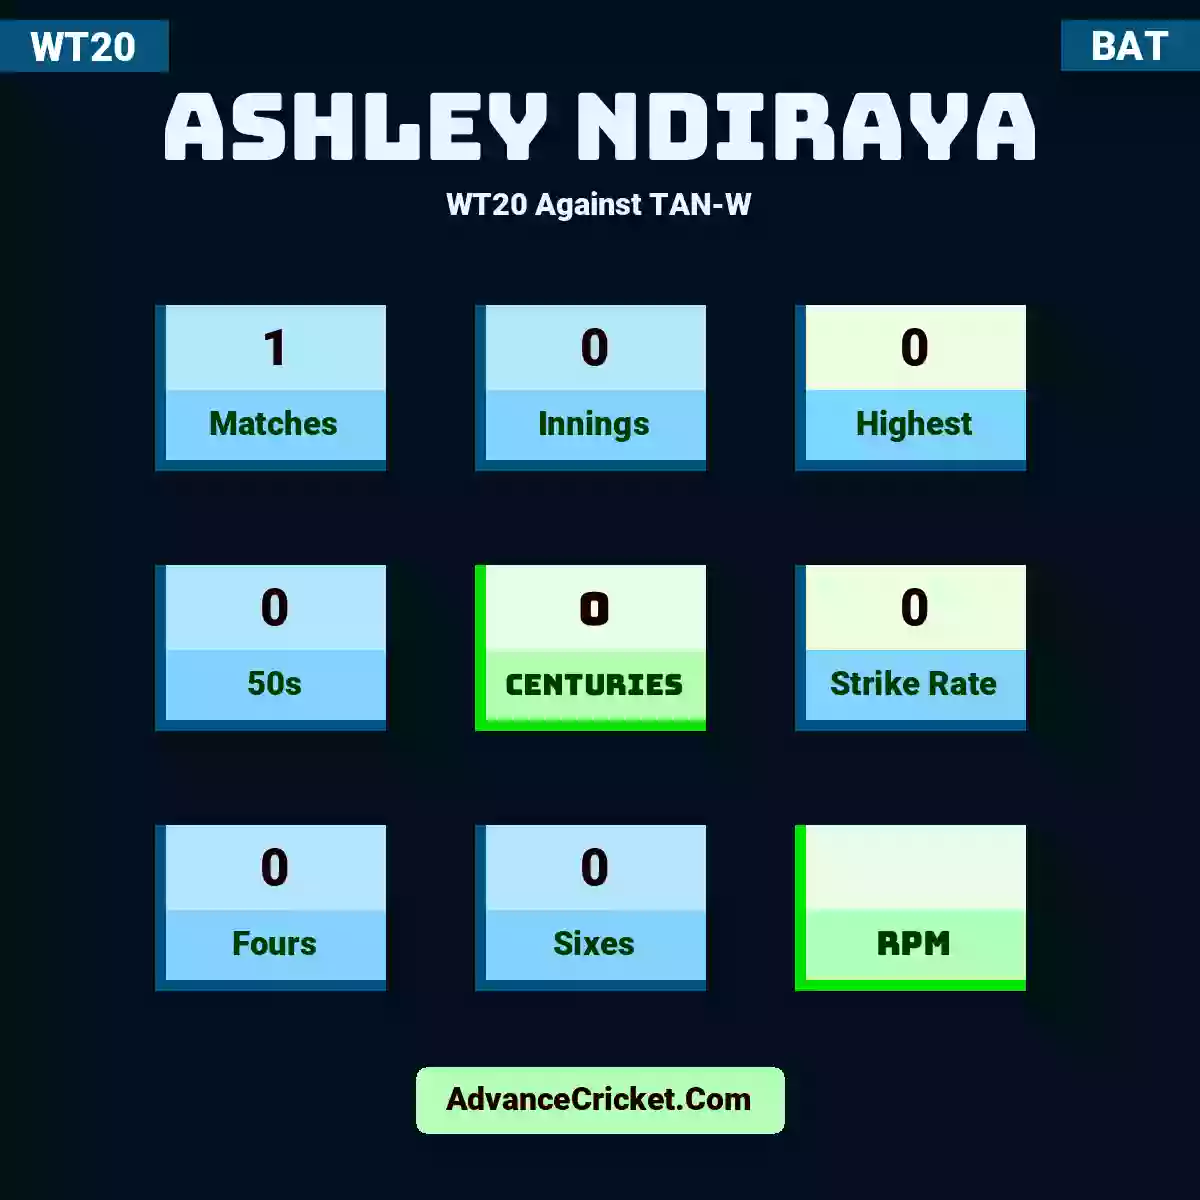 Ashley Ndiraya WT20  Against TAN-W, Ashley Ndiraya played 1 matches, scored 0 runs as highest, 0 half-centuries, and 0 centuries, with a strike rate of 0. A.Ndiraya hit 0 fours and 0 sixes.